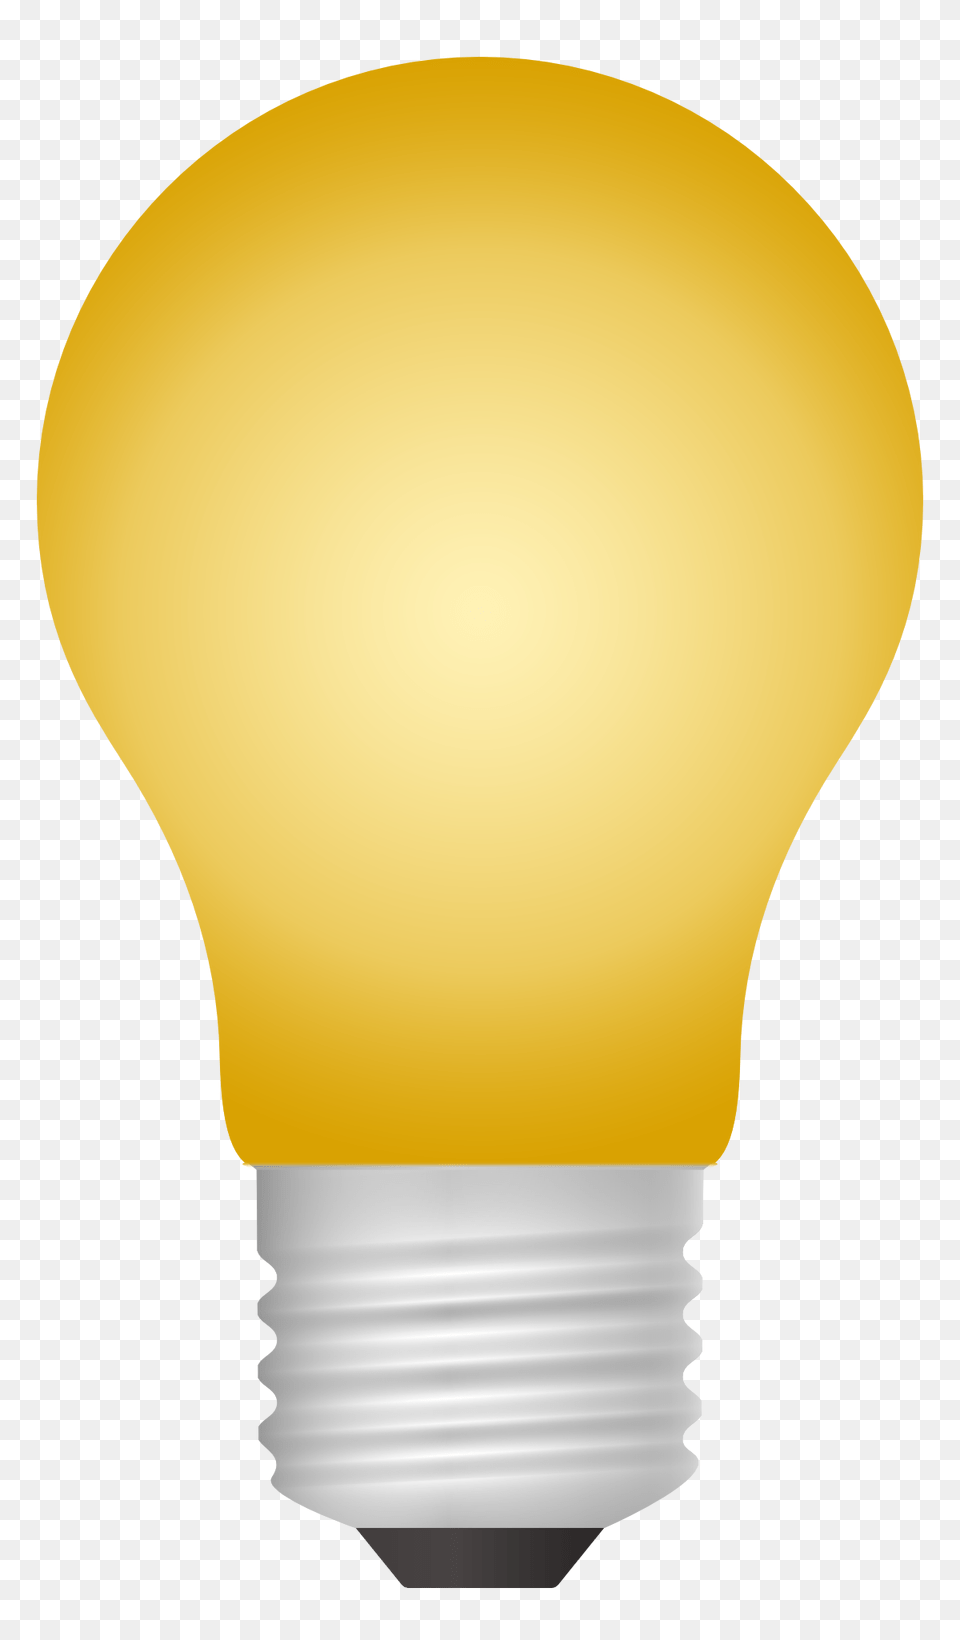 Pngpix Com Light Bulb Vector Transparent Image, Lightbulb Free Png